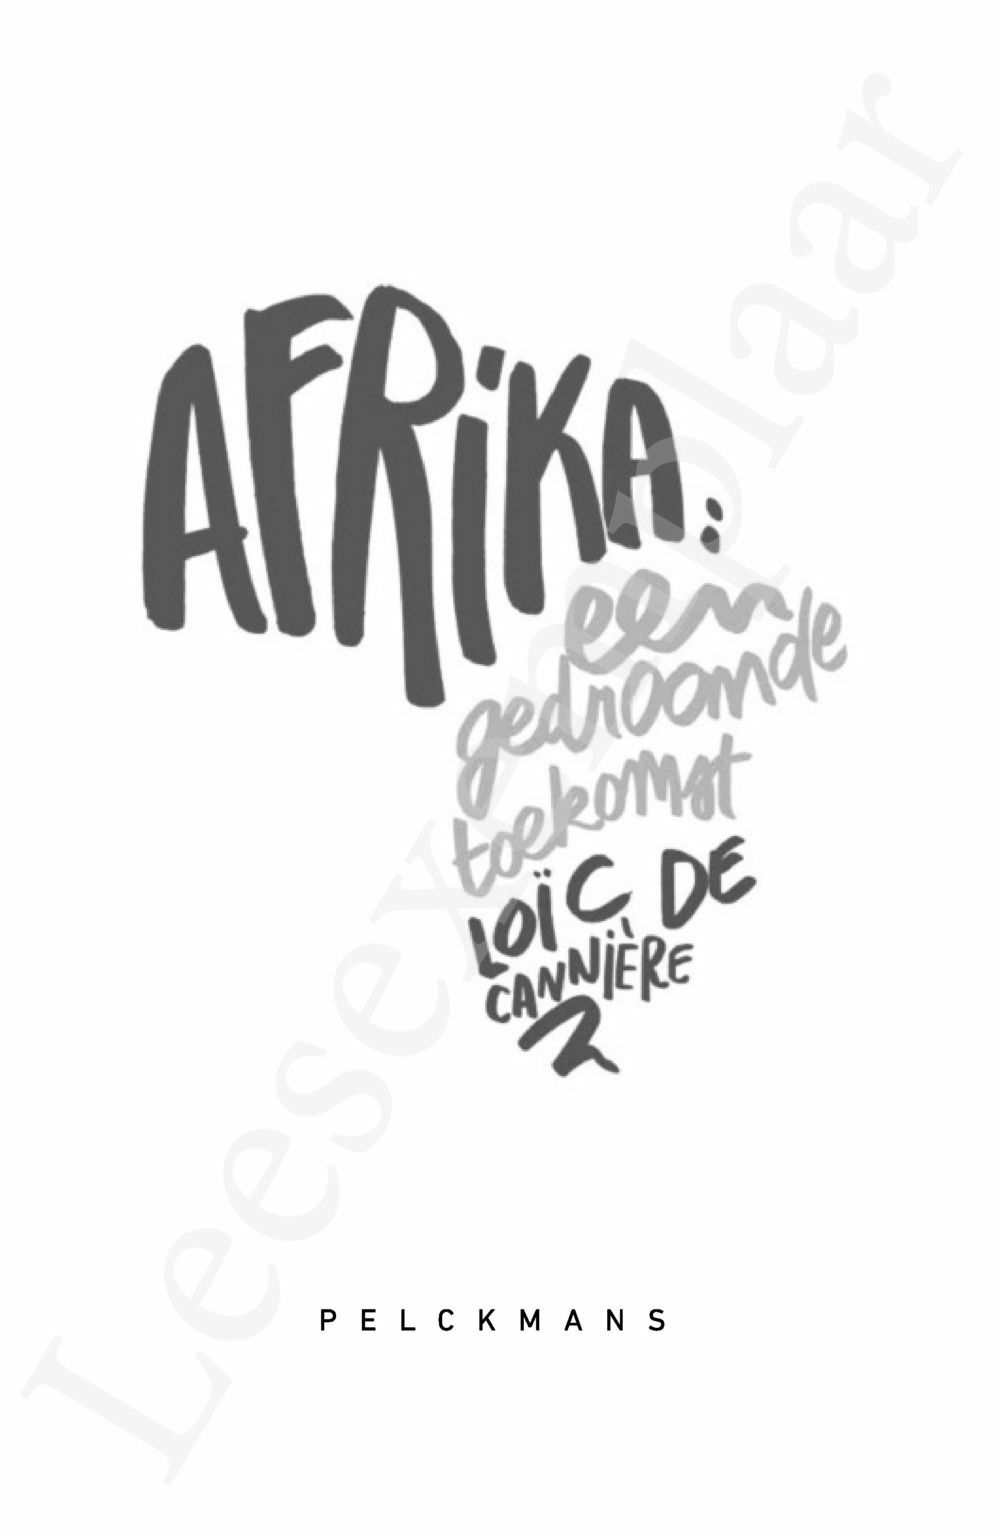 Preview: Afrika: een gedroomde toekomst